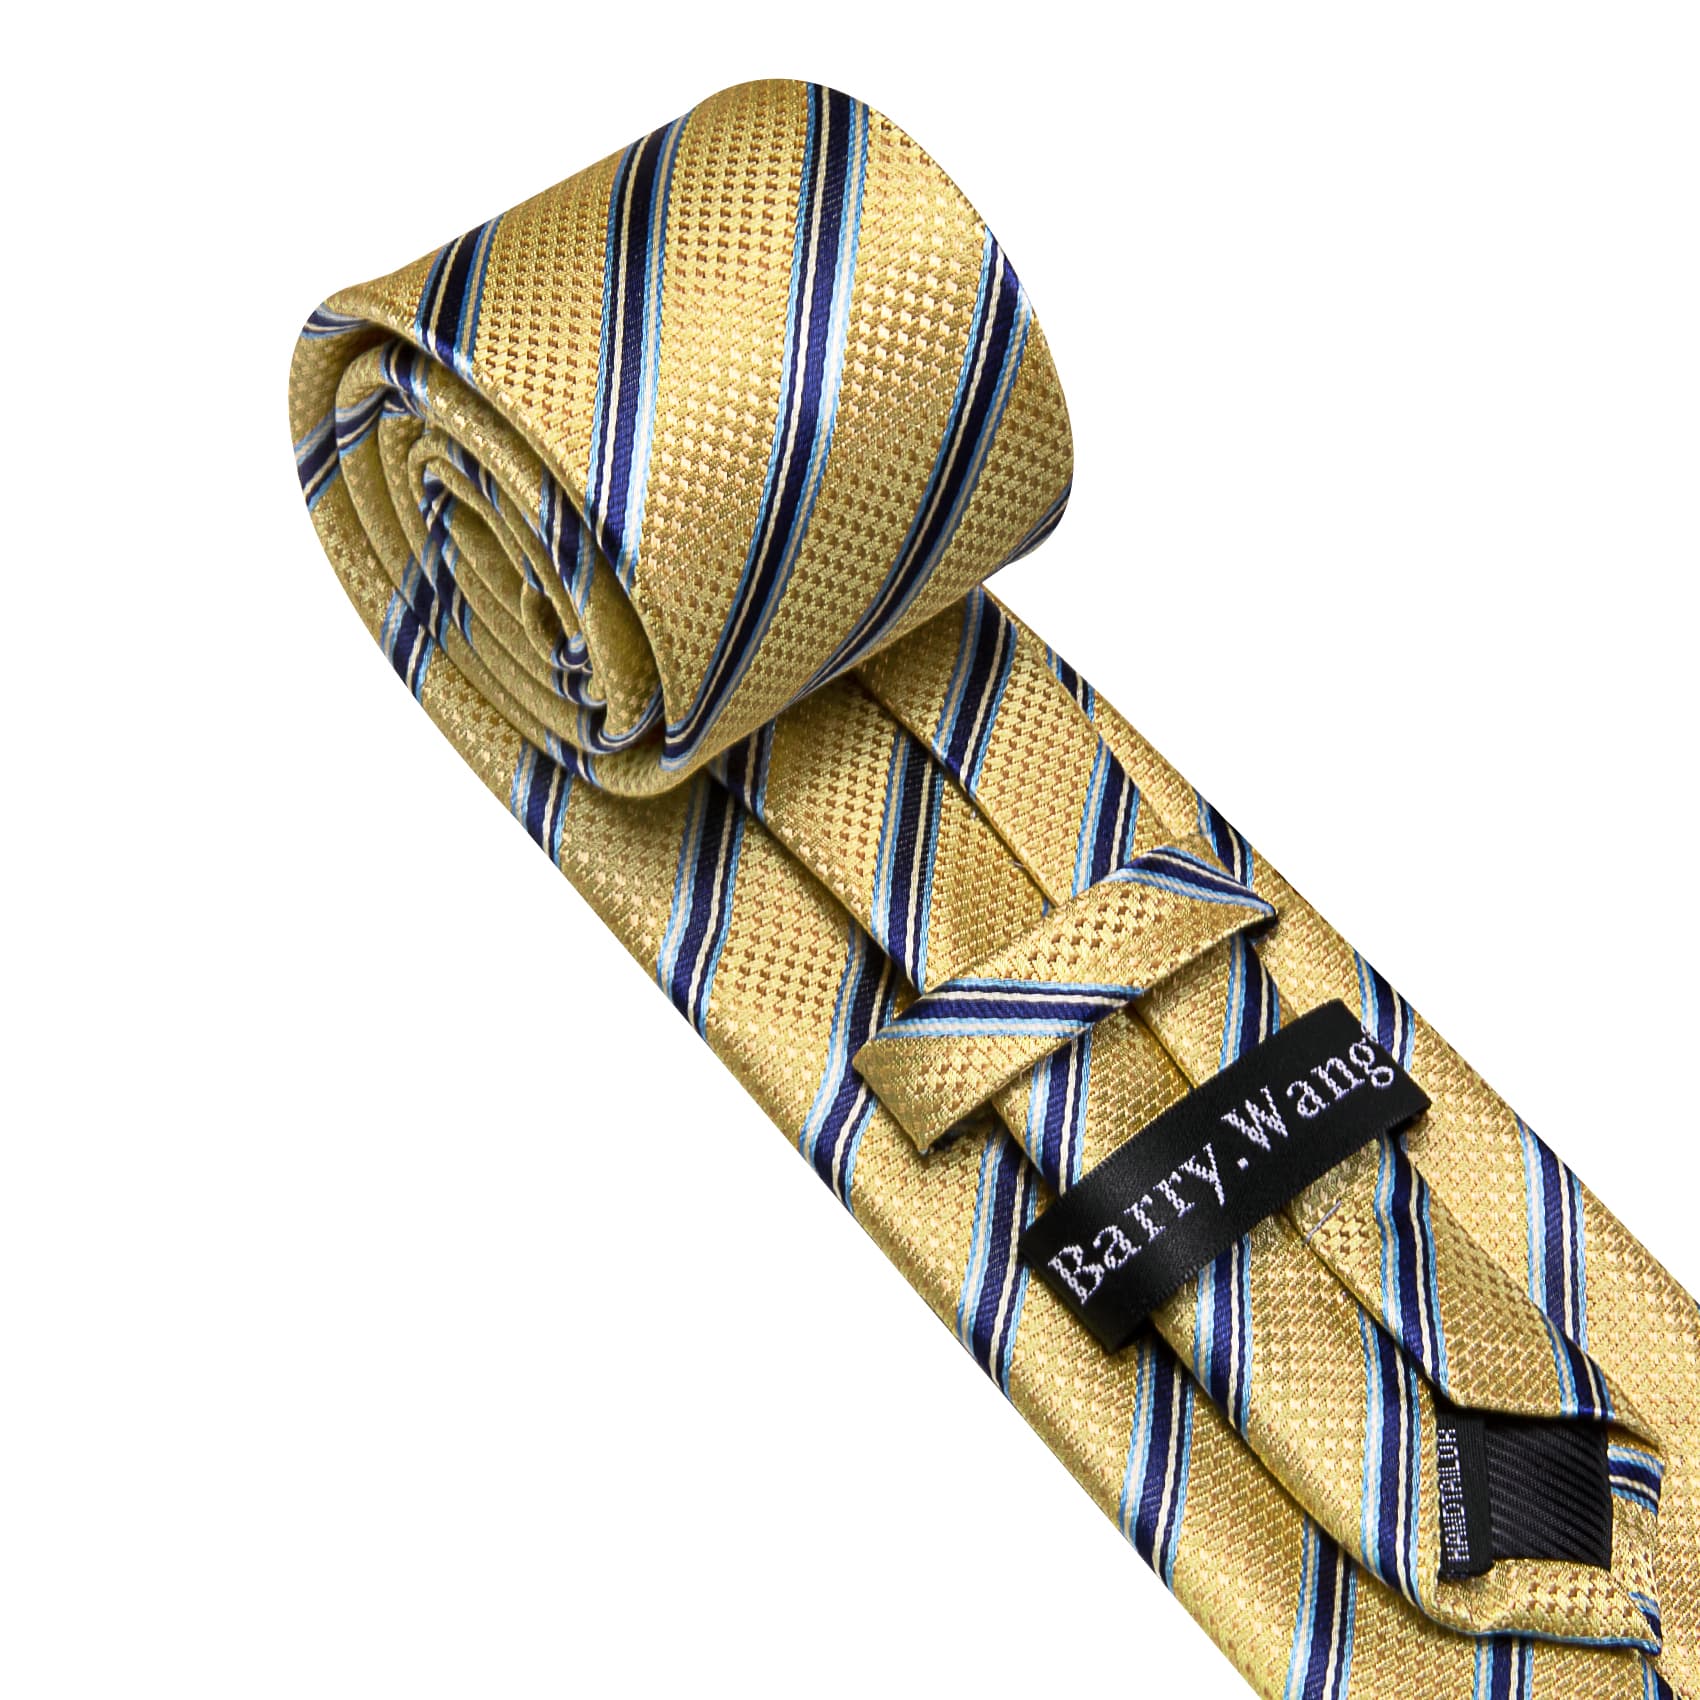 Barry Wang Khaki Dark Blue Stripes Men Tie Handkerchief Pocket Set